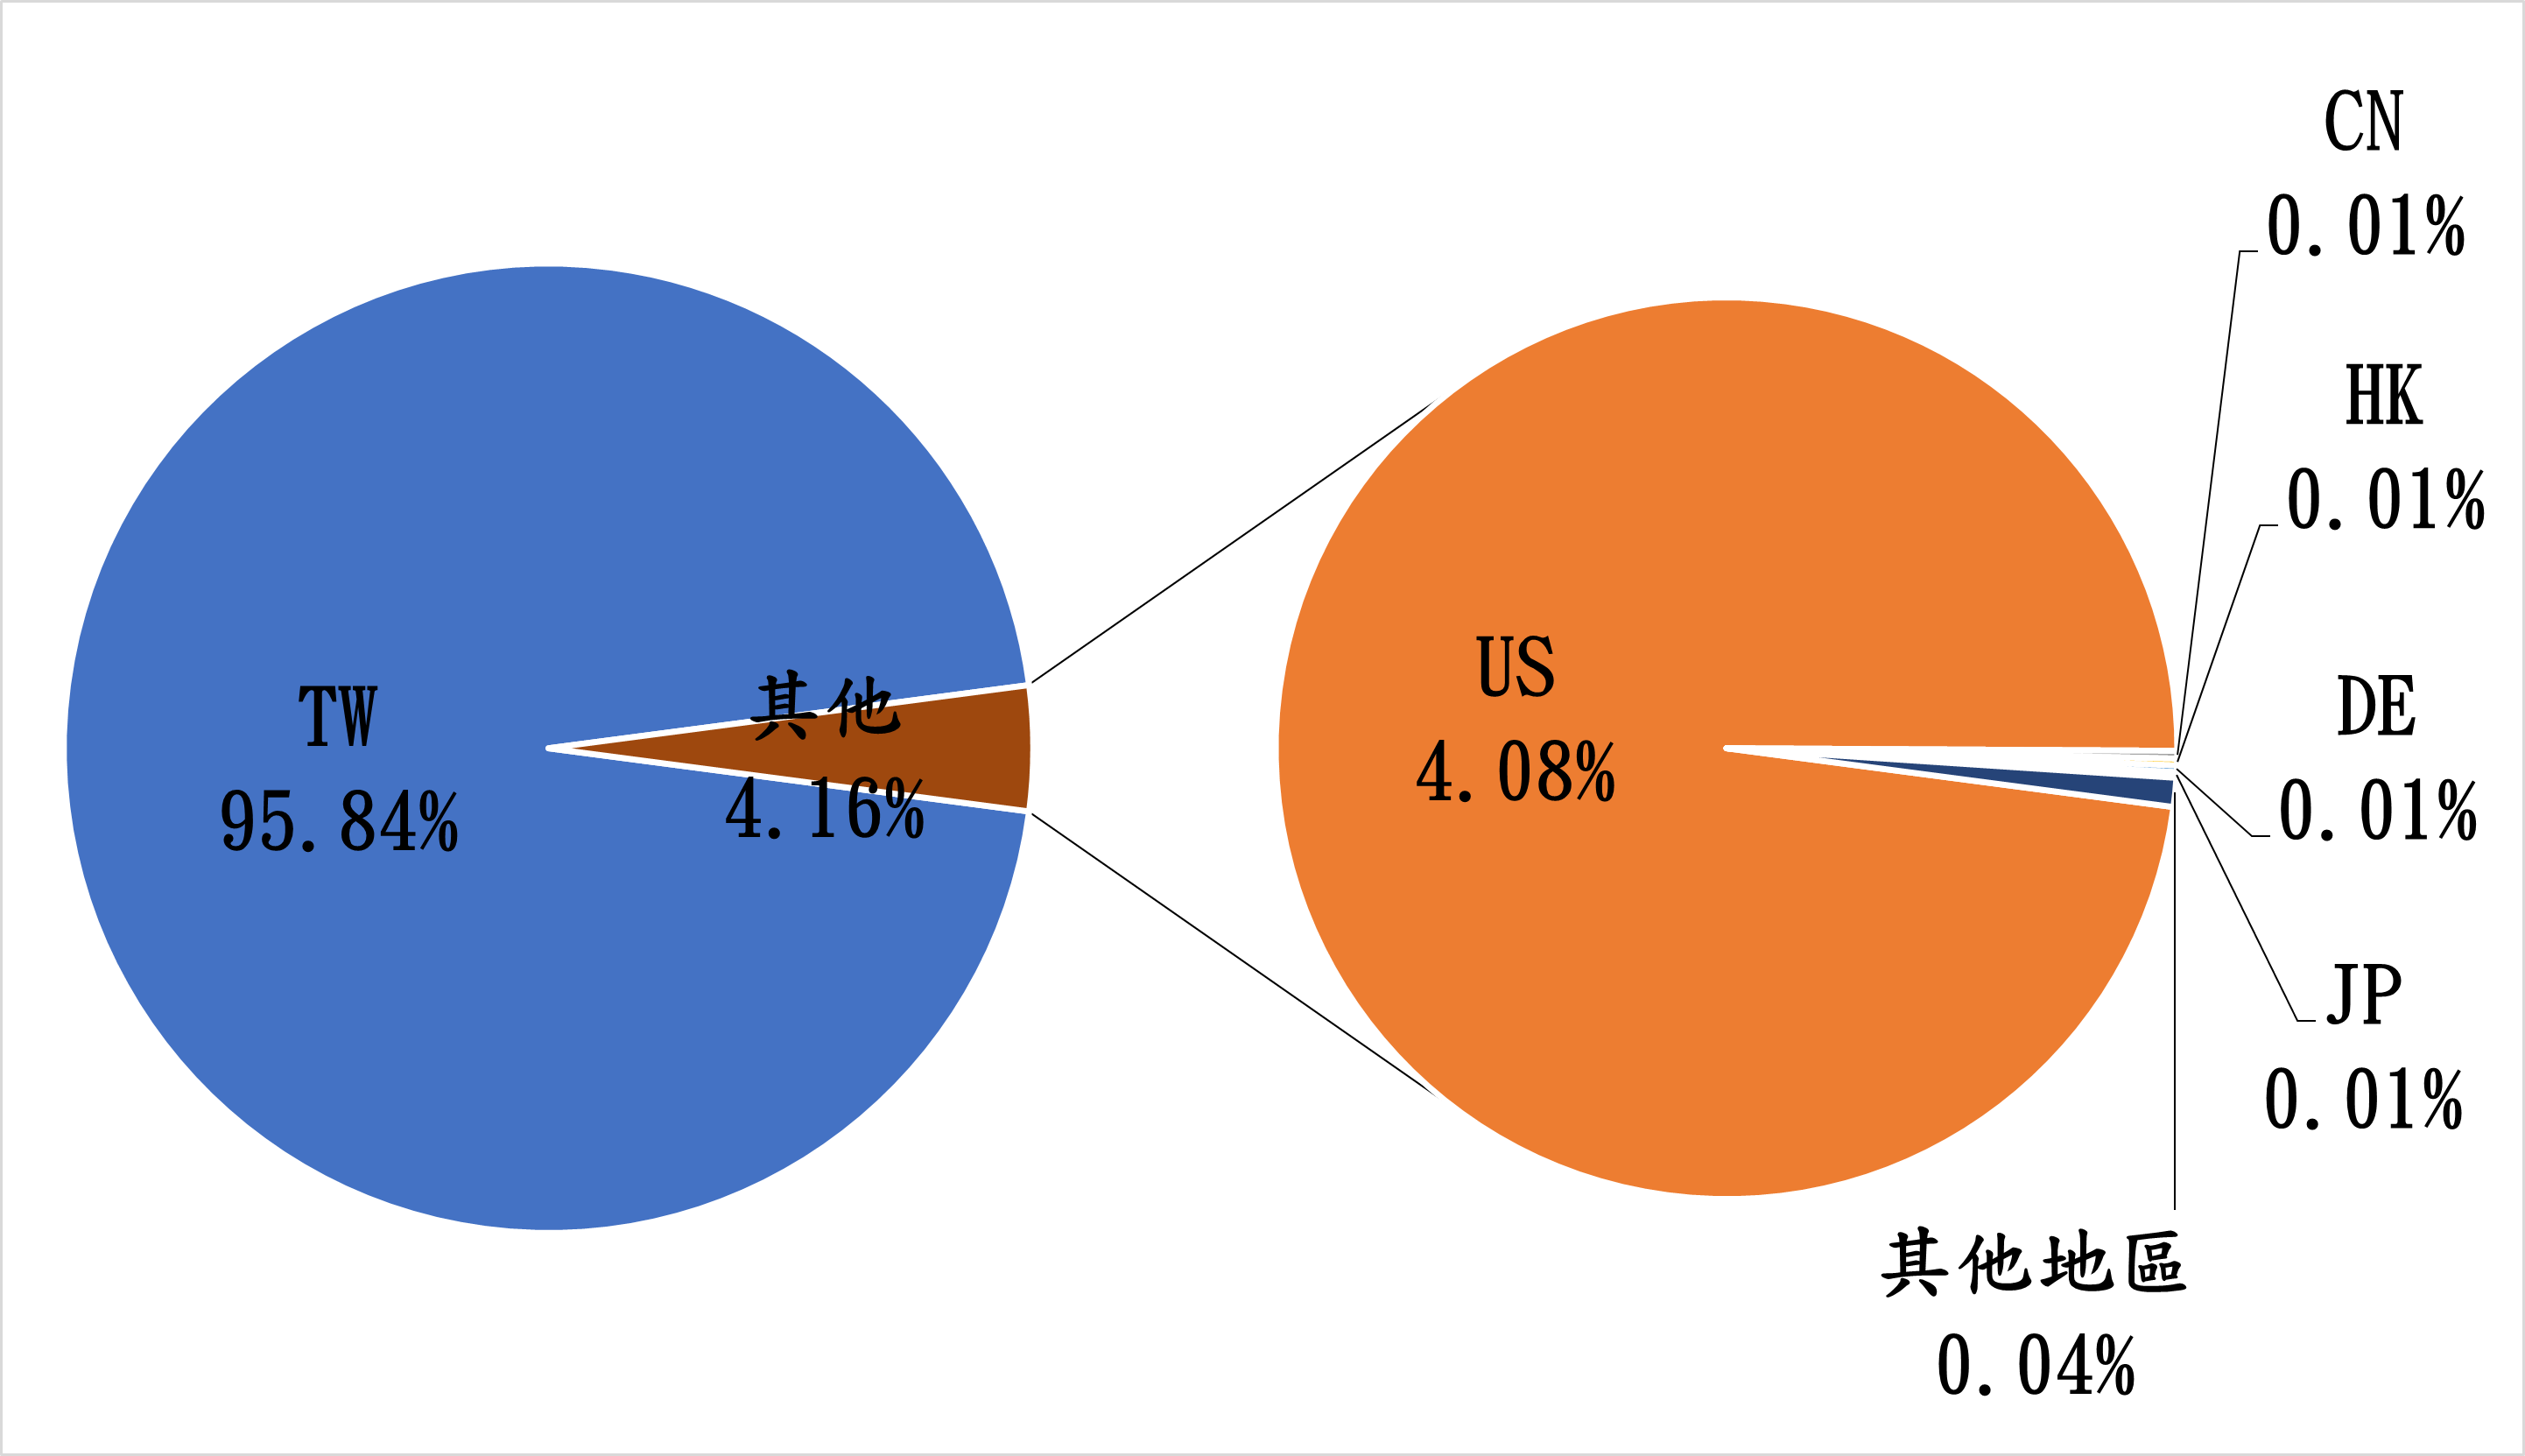 TW95.84% 其他4.16% US4.08% CN0.01% HK0.01% DE0.01% JP0.01% 其他地區0.04%